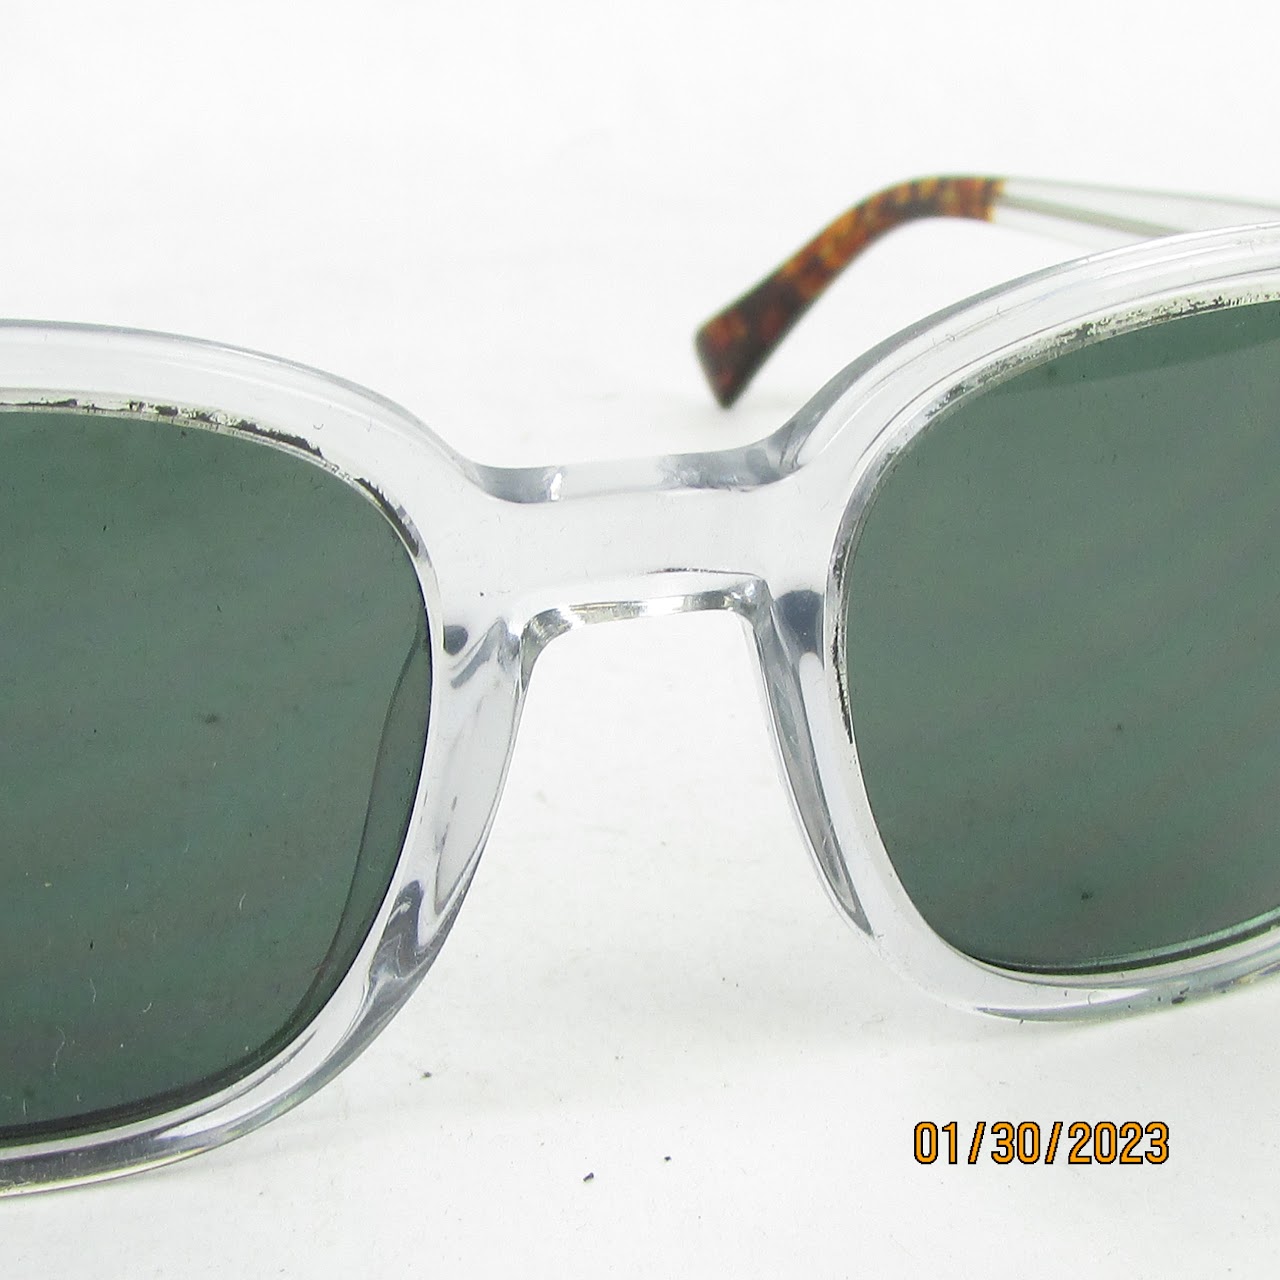 EPOKHE Rx Sunglasses